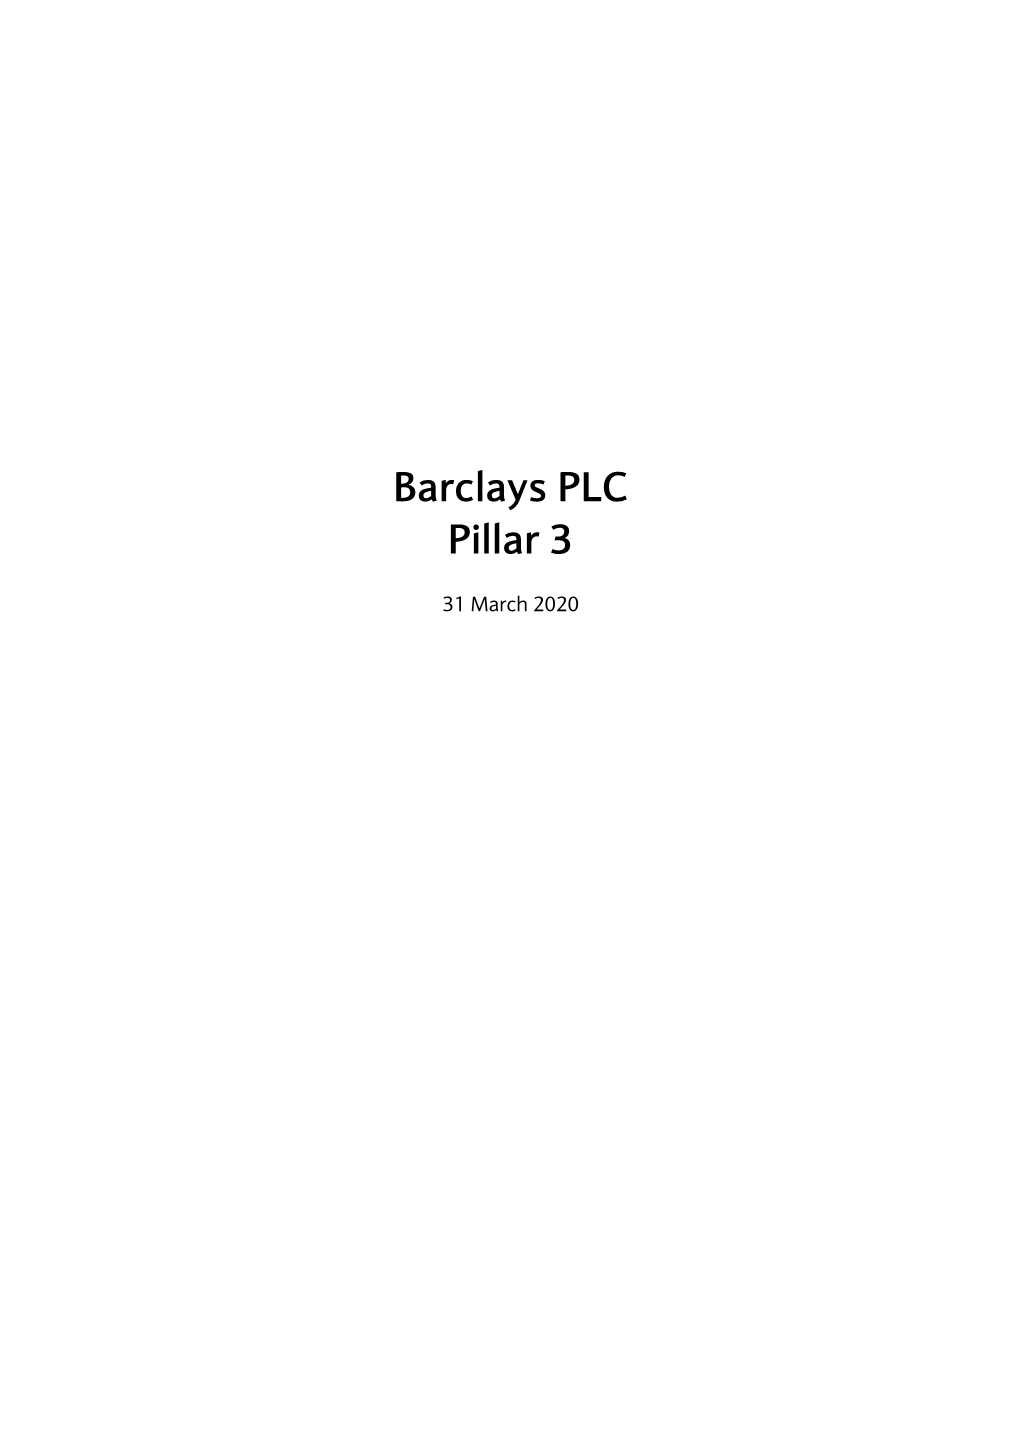 Barclays-PLC-Pillar-3-Q1-2020.Pdf